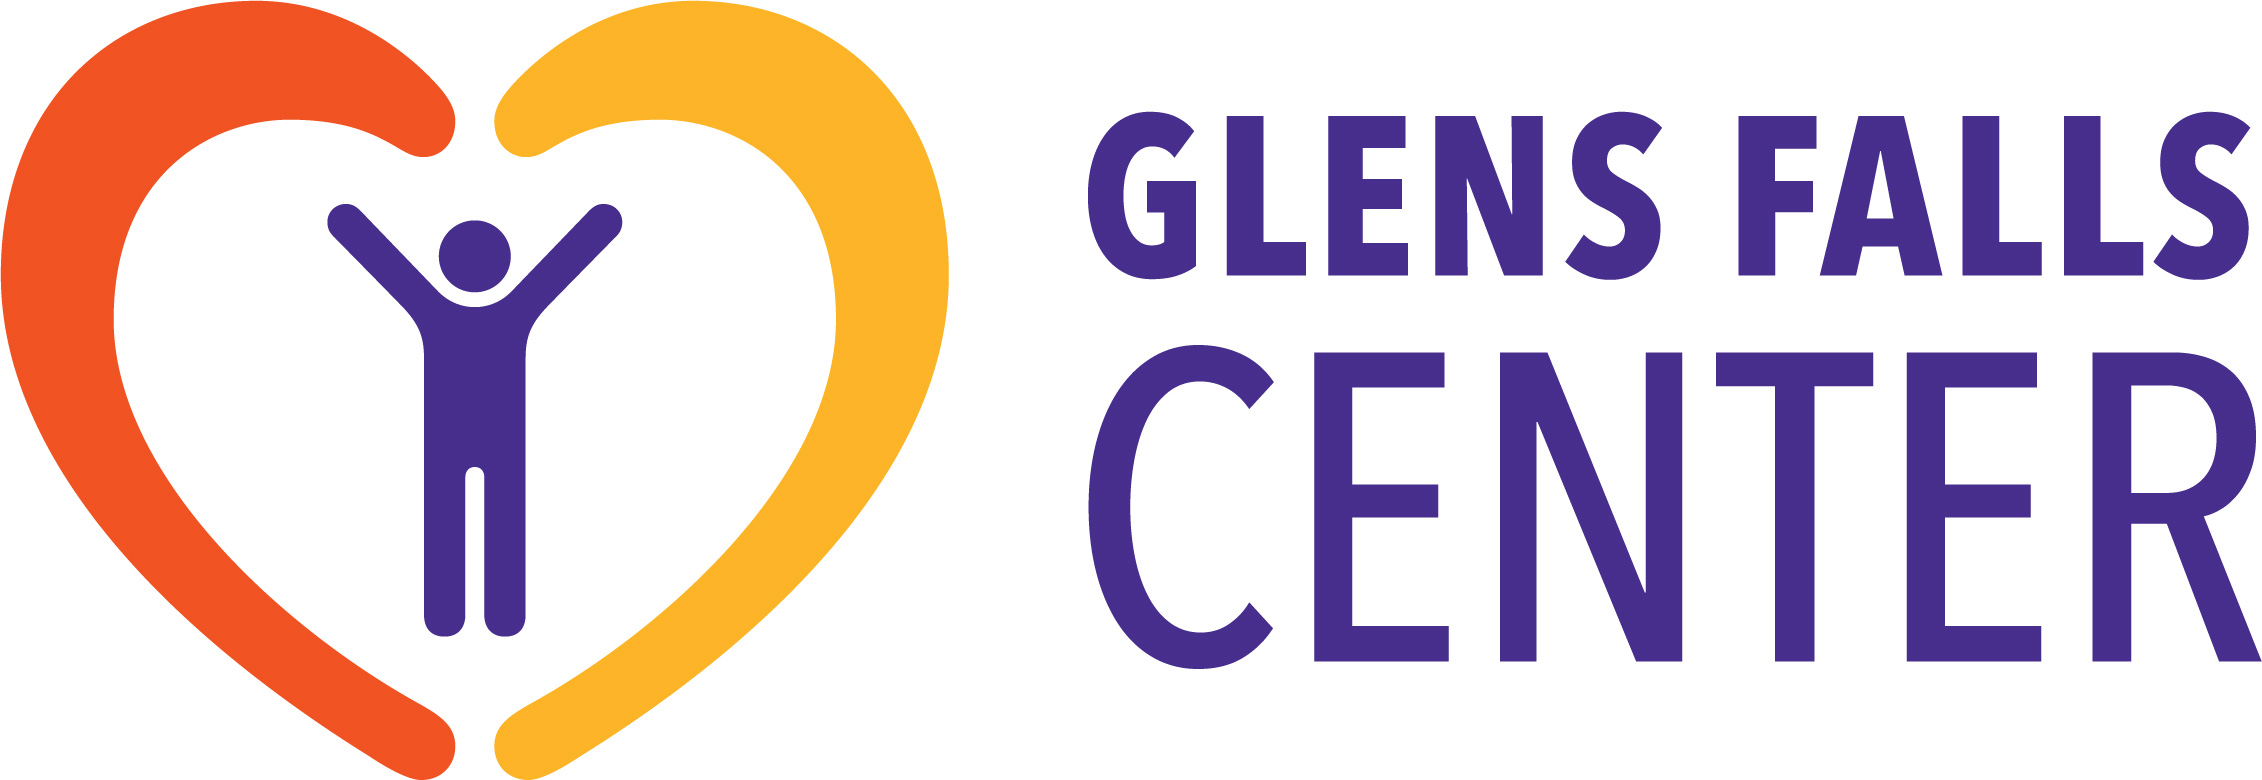 Glens Falls Center logo